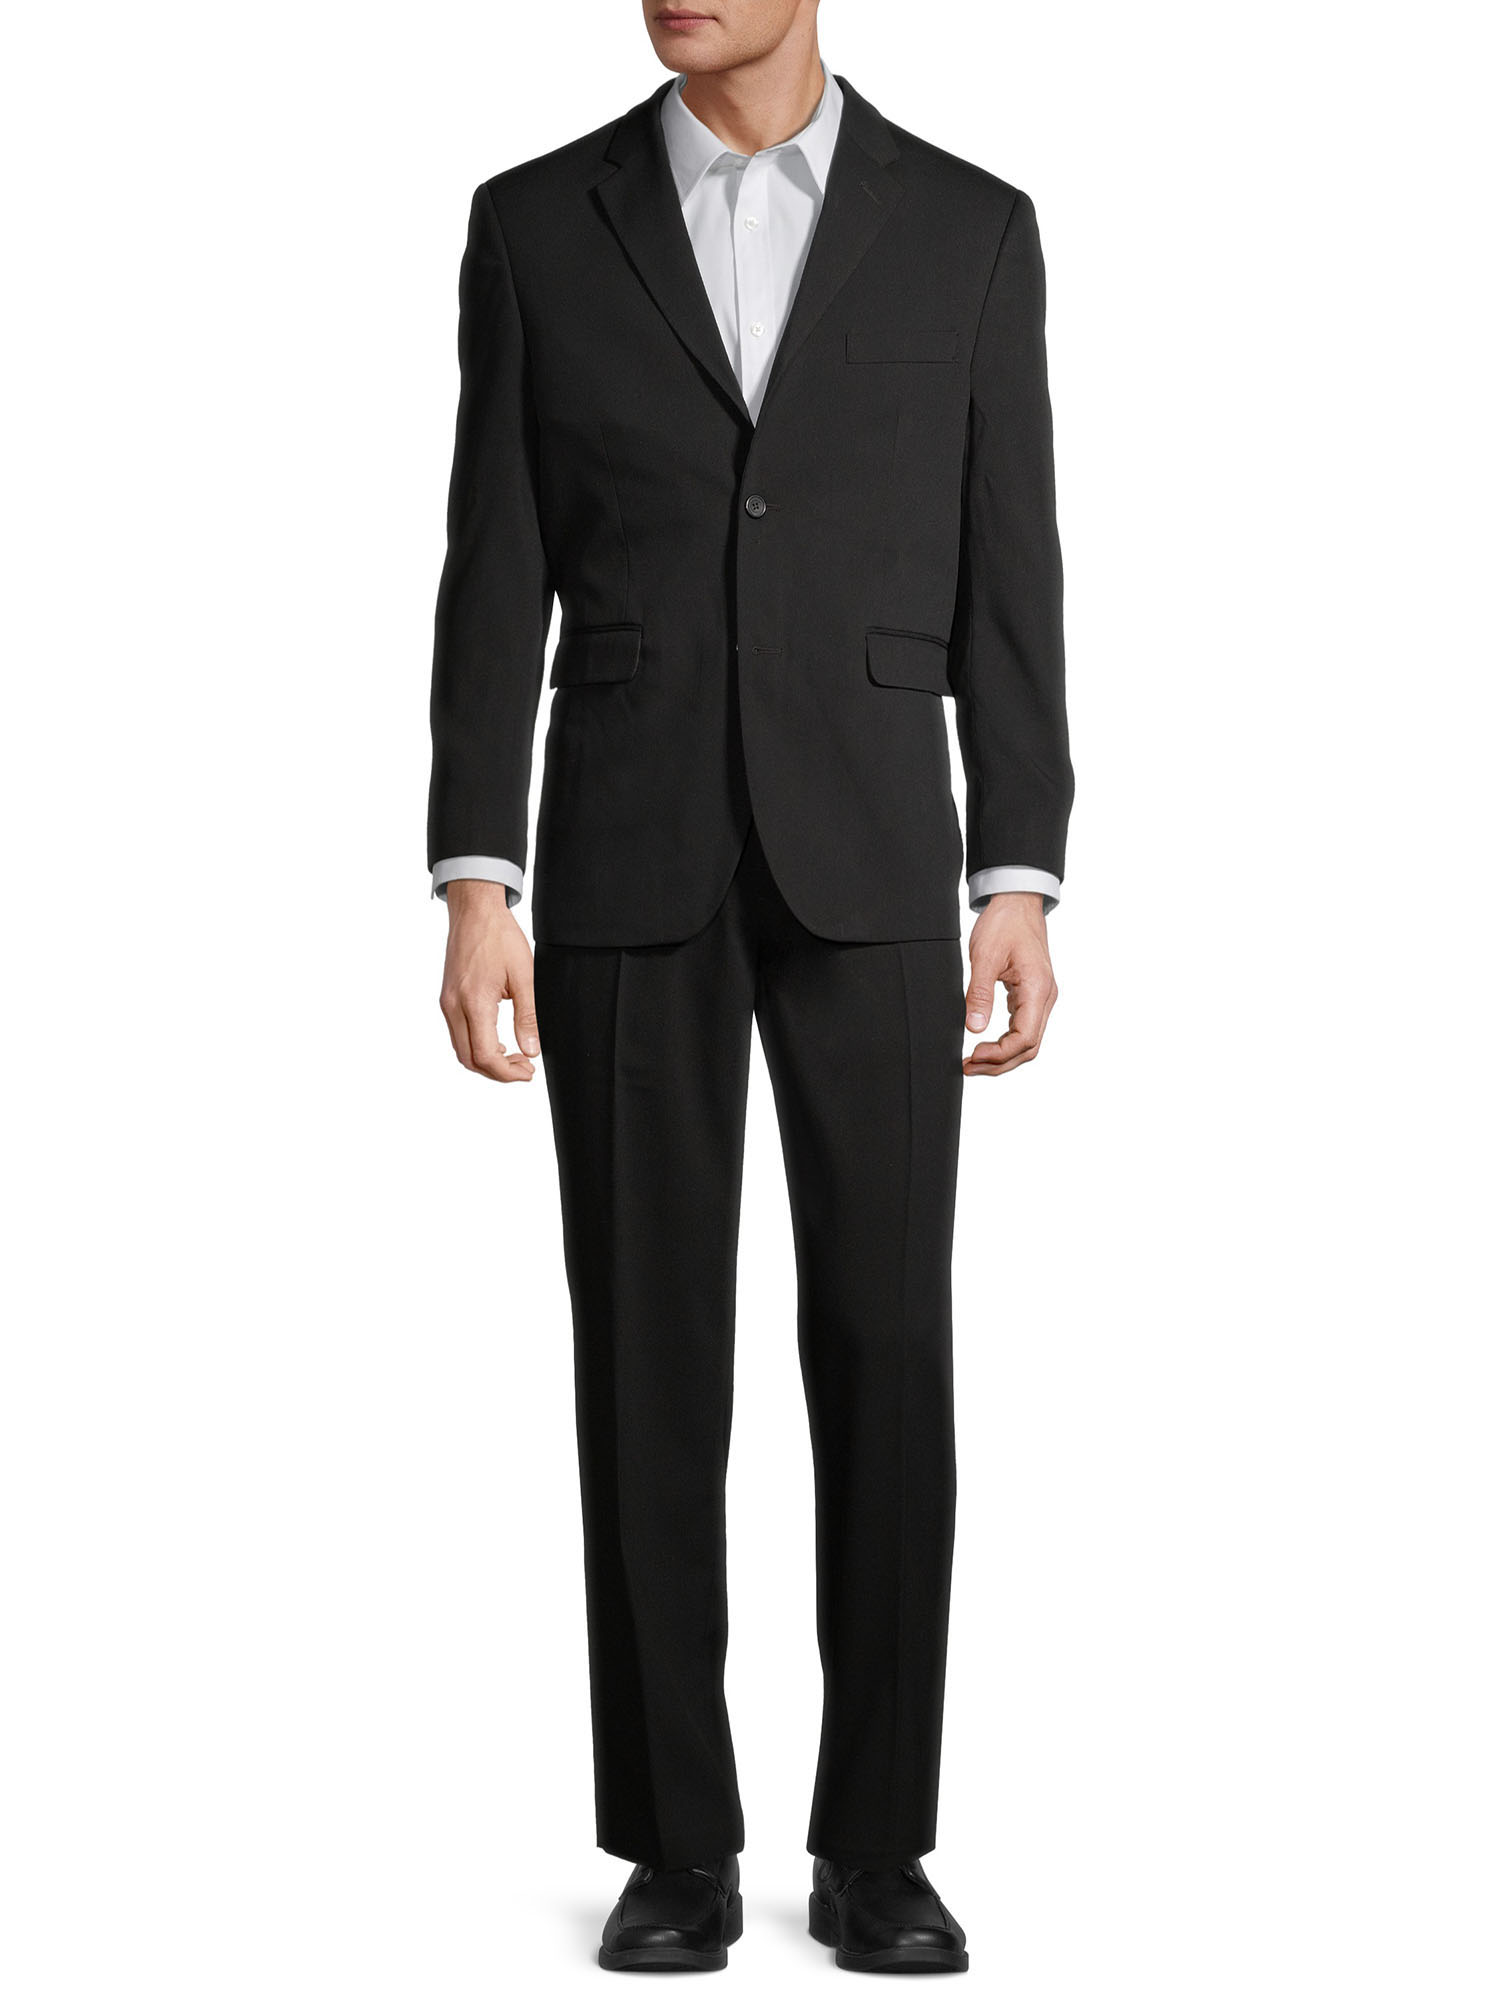 George Men's Performance Comfort Flex Suit Jacket - image 2 of 6